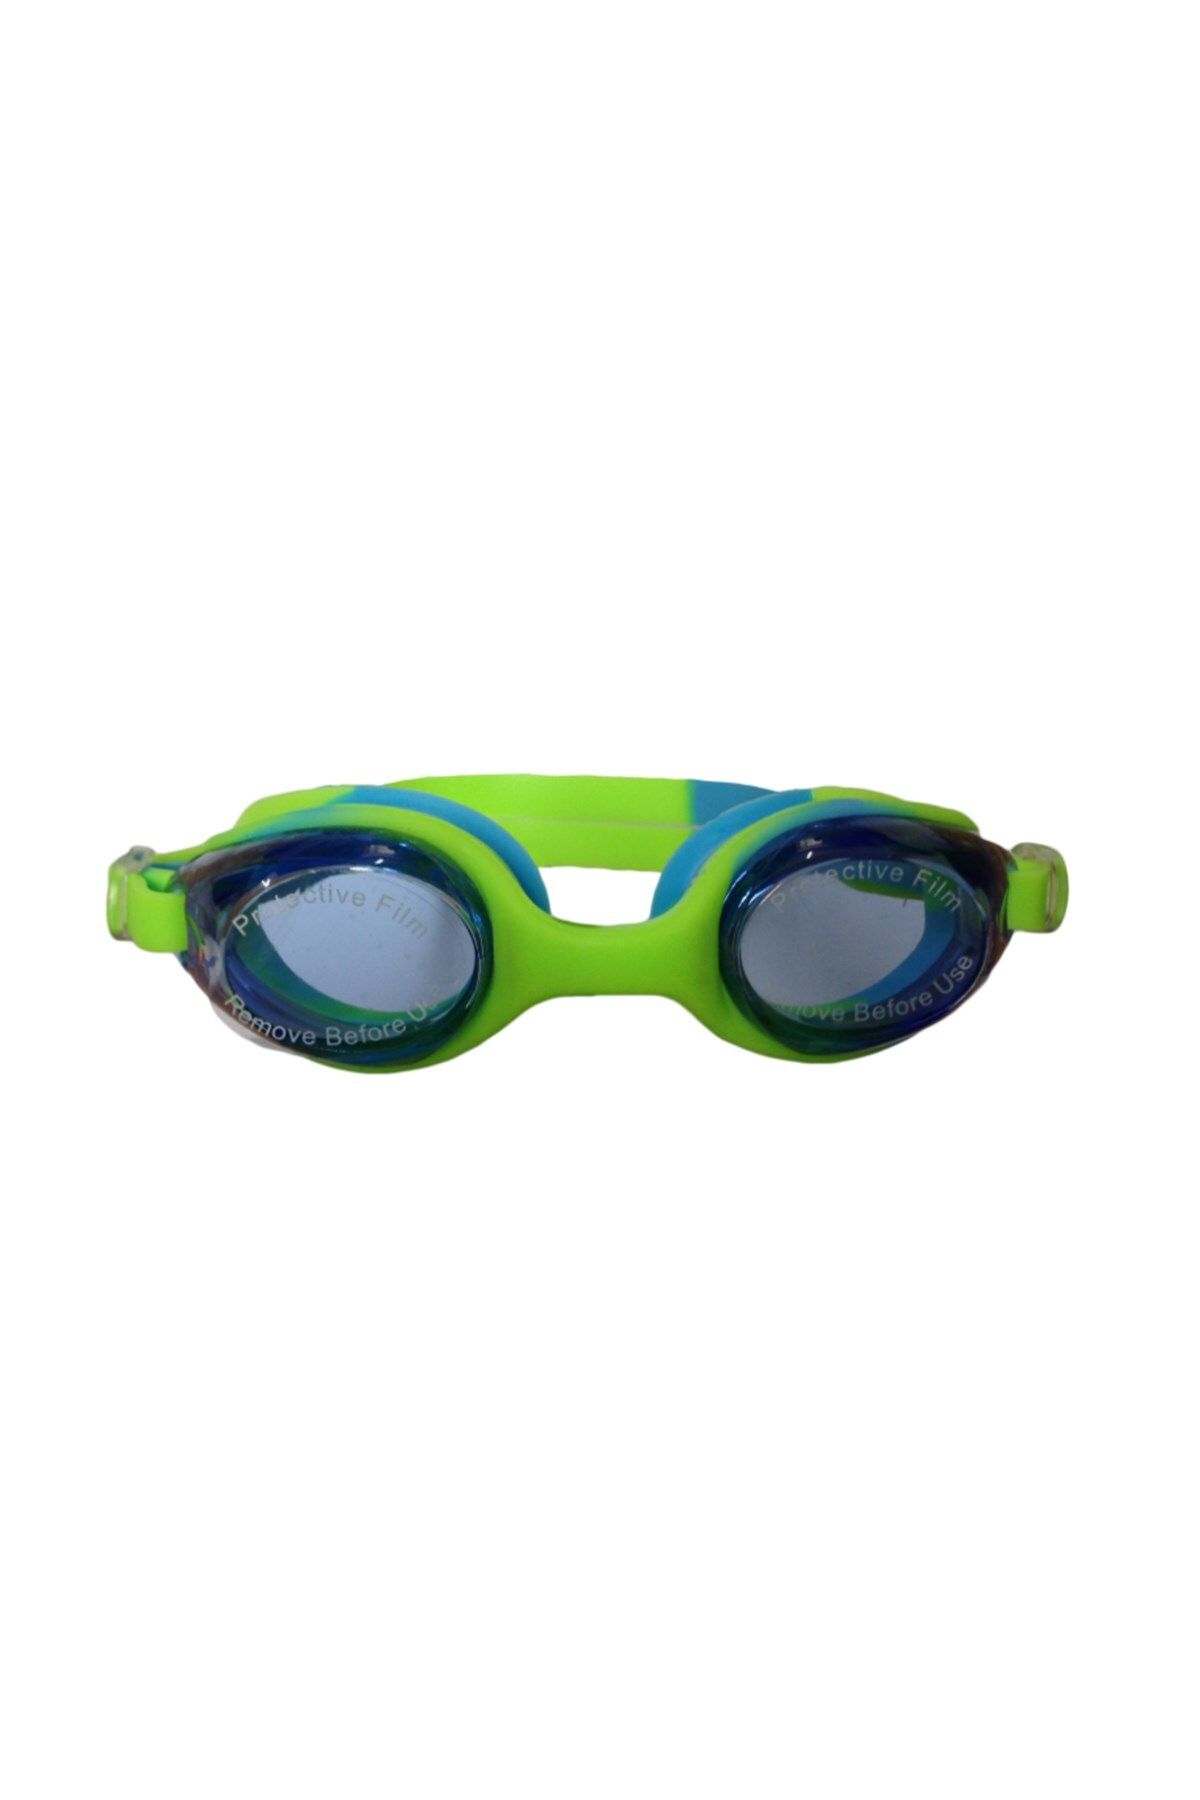 SELEX Unisex Yeşil Yüzücü Gözlüğü Sg 1110 Yeşil-yeşil